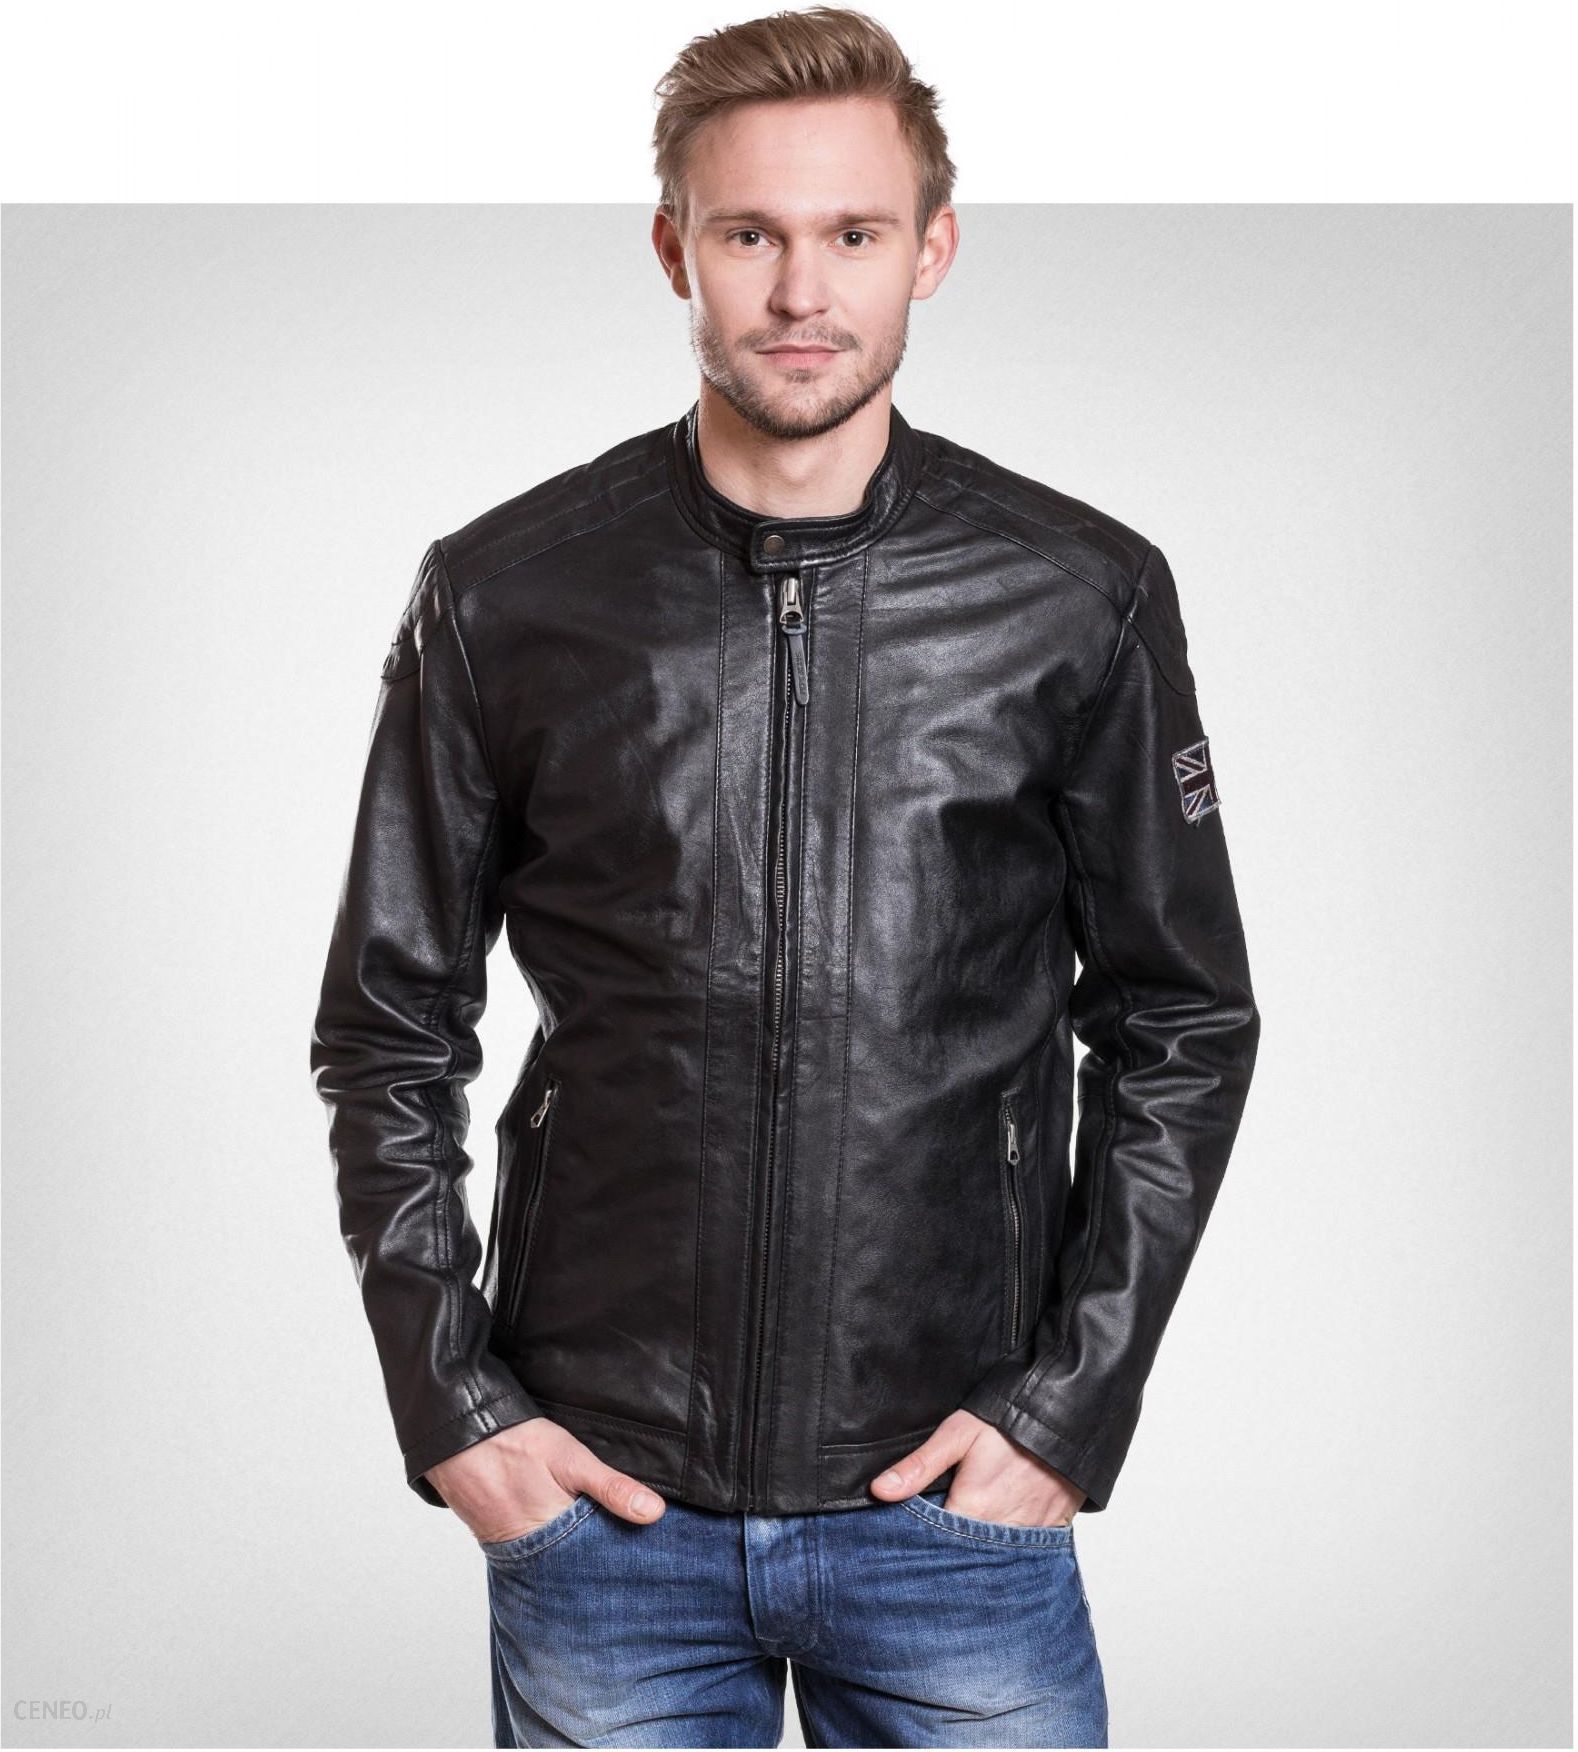 Pepe Jeans Lennon Leather Jacket Black - Ceny i opinie - Ceneo.pl